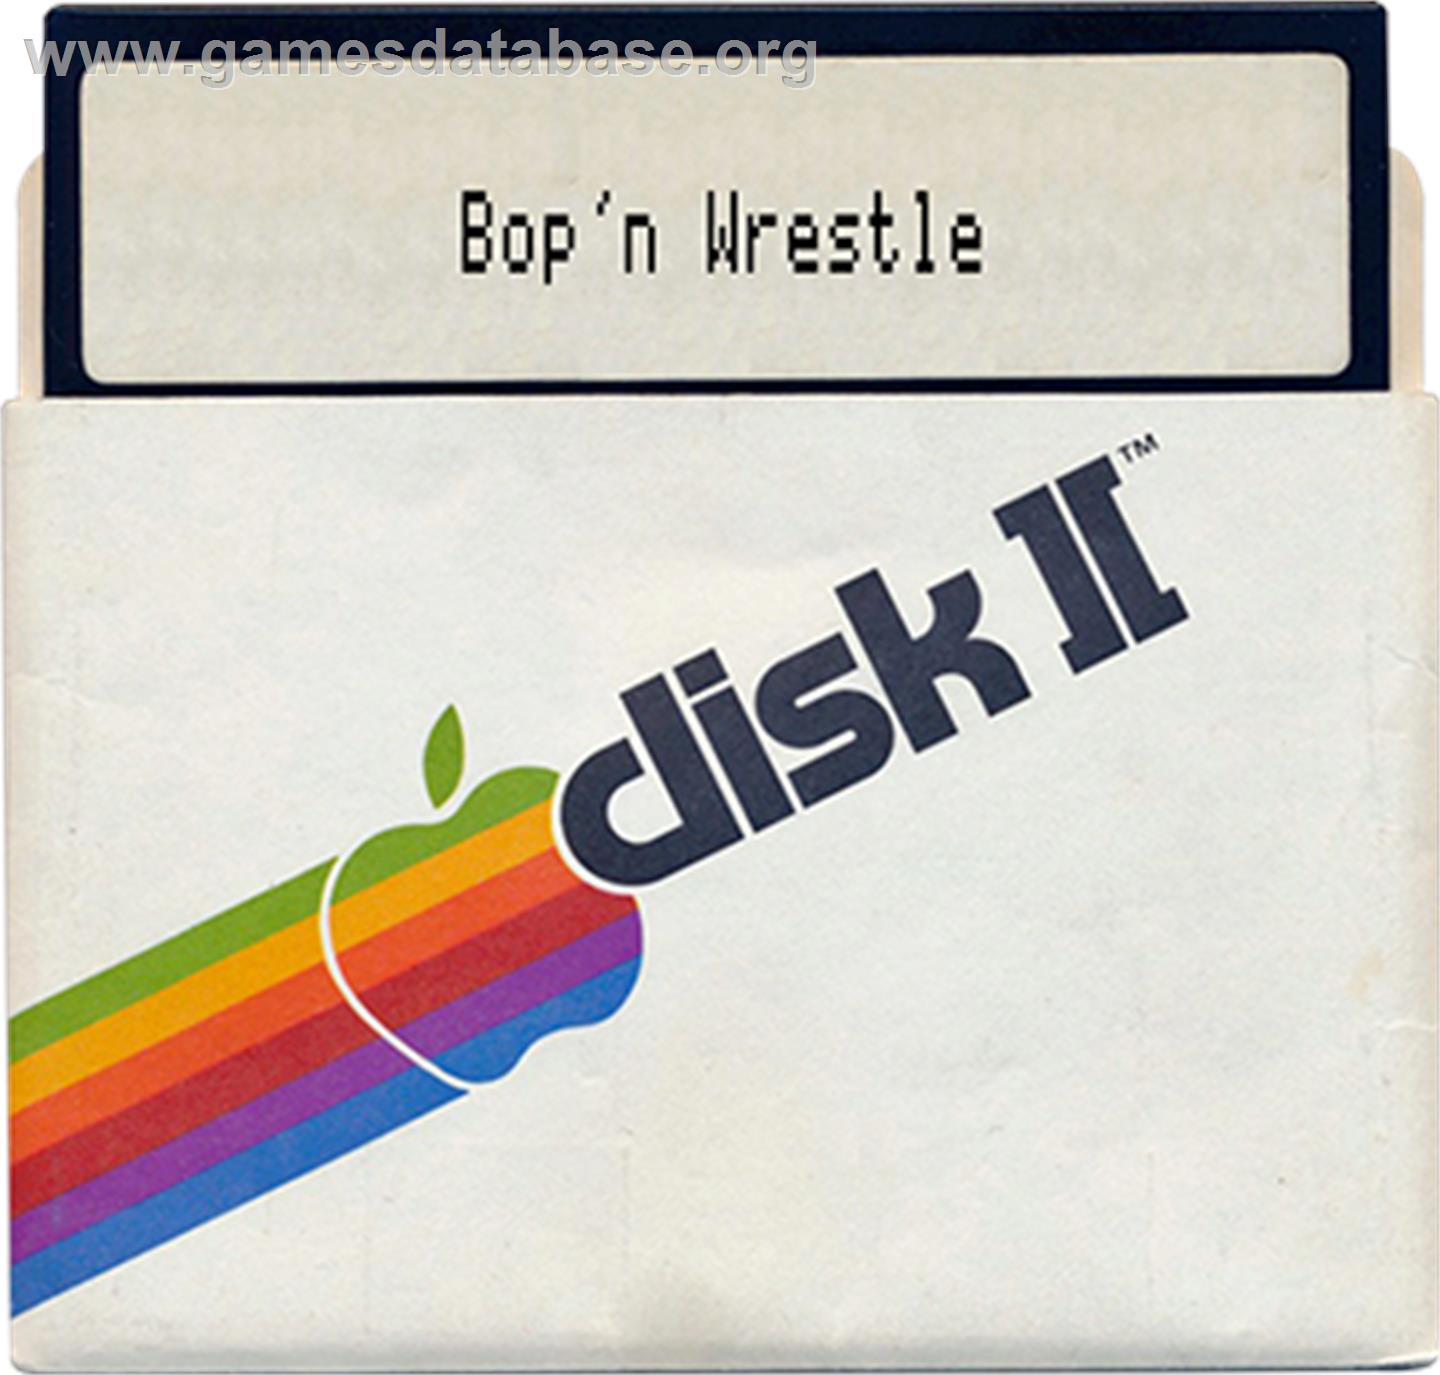 Bop 'n Wrestle - Apple II - Artwork - Disc